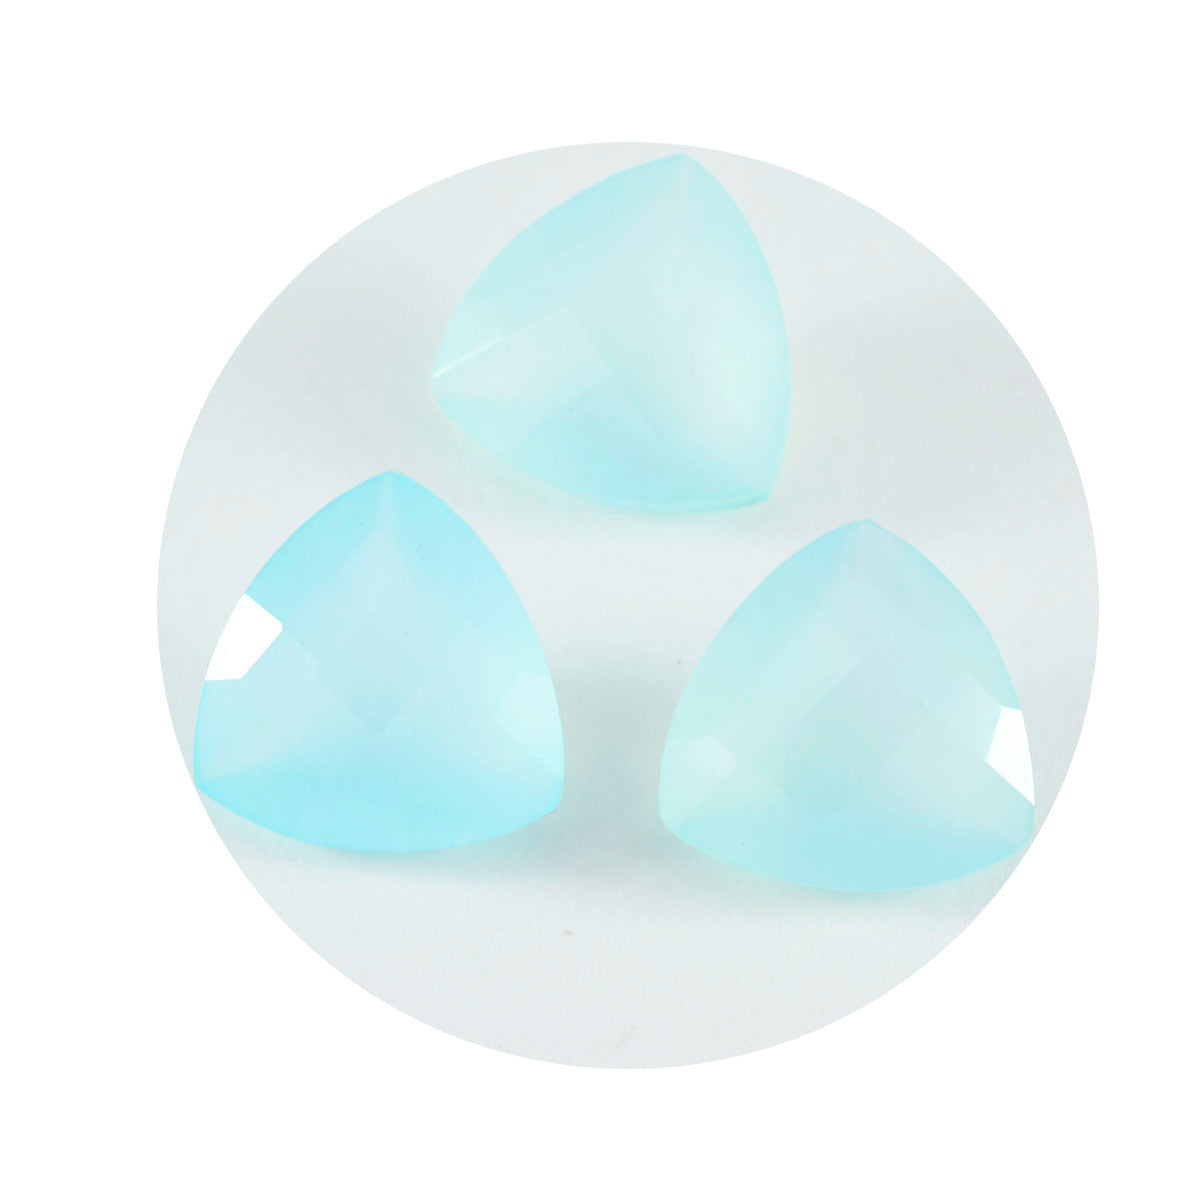 Riyogems 1PC Real Aqua Chalcedony Faceted 11x11 mm Trillion Shape attractive Quality Gemstone